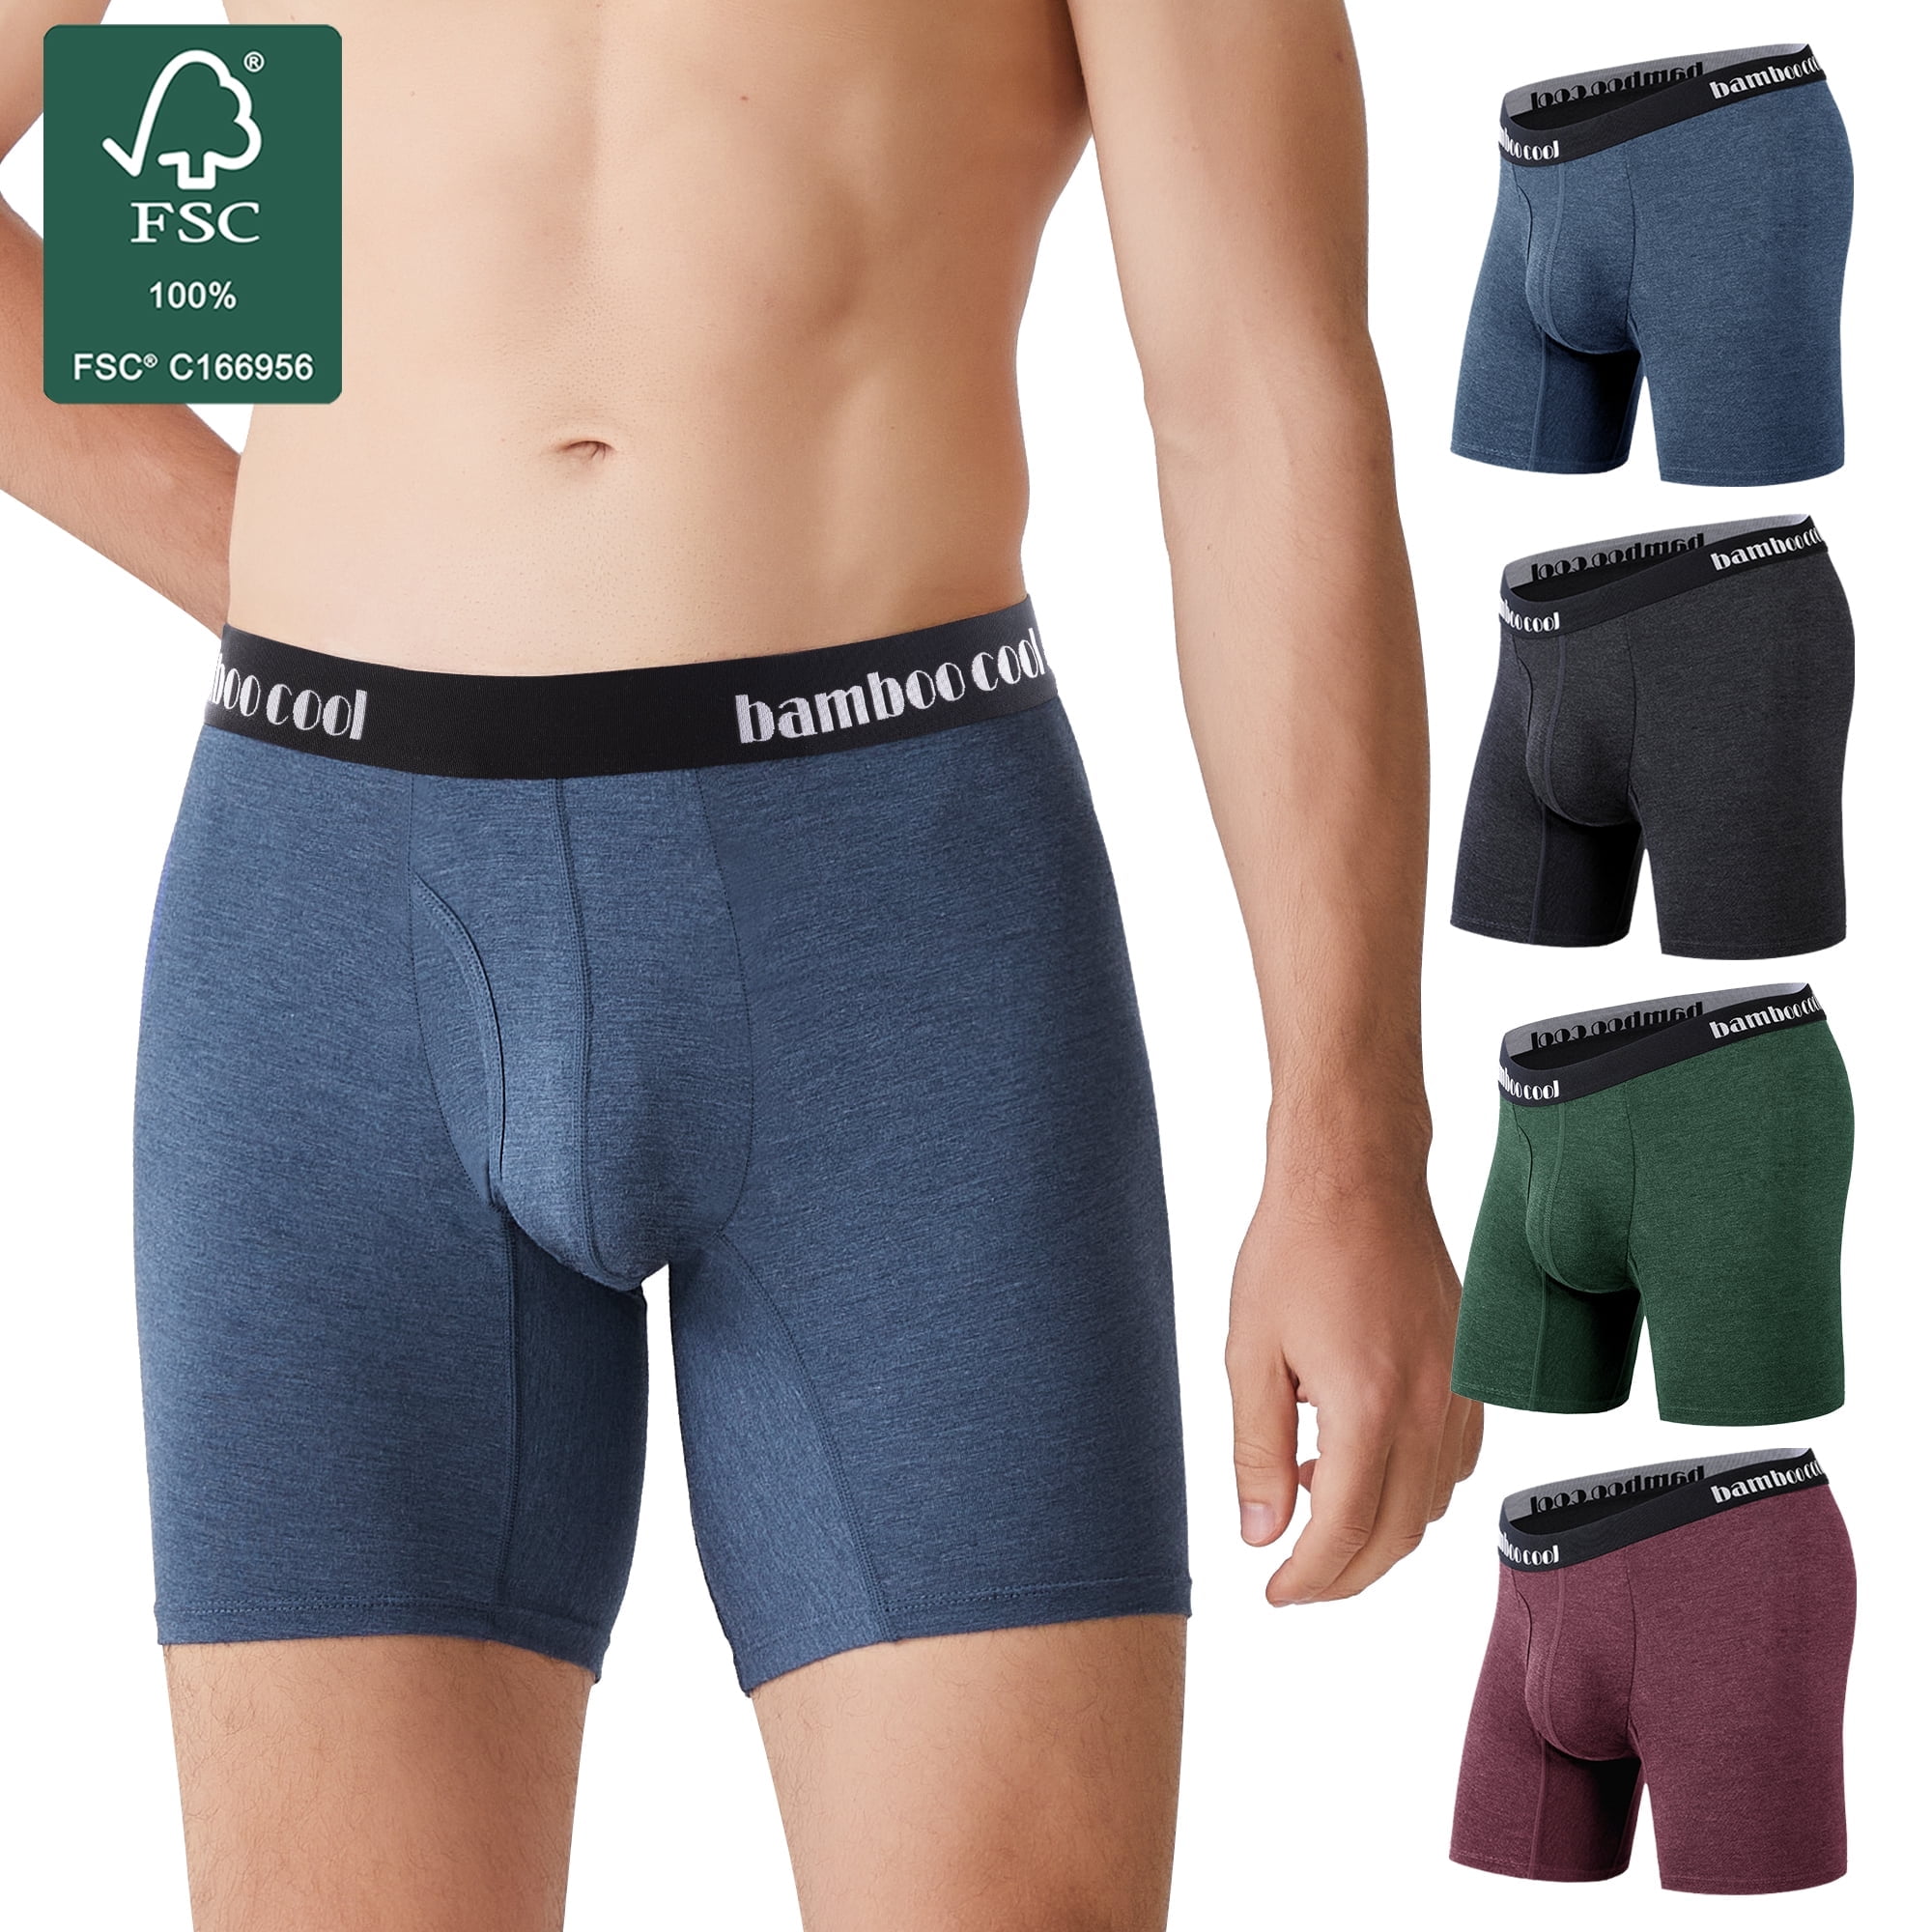 Men's Bamboo Boxer Briefs Underwear,Bamboo Viscose Trunks,Moisture ...